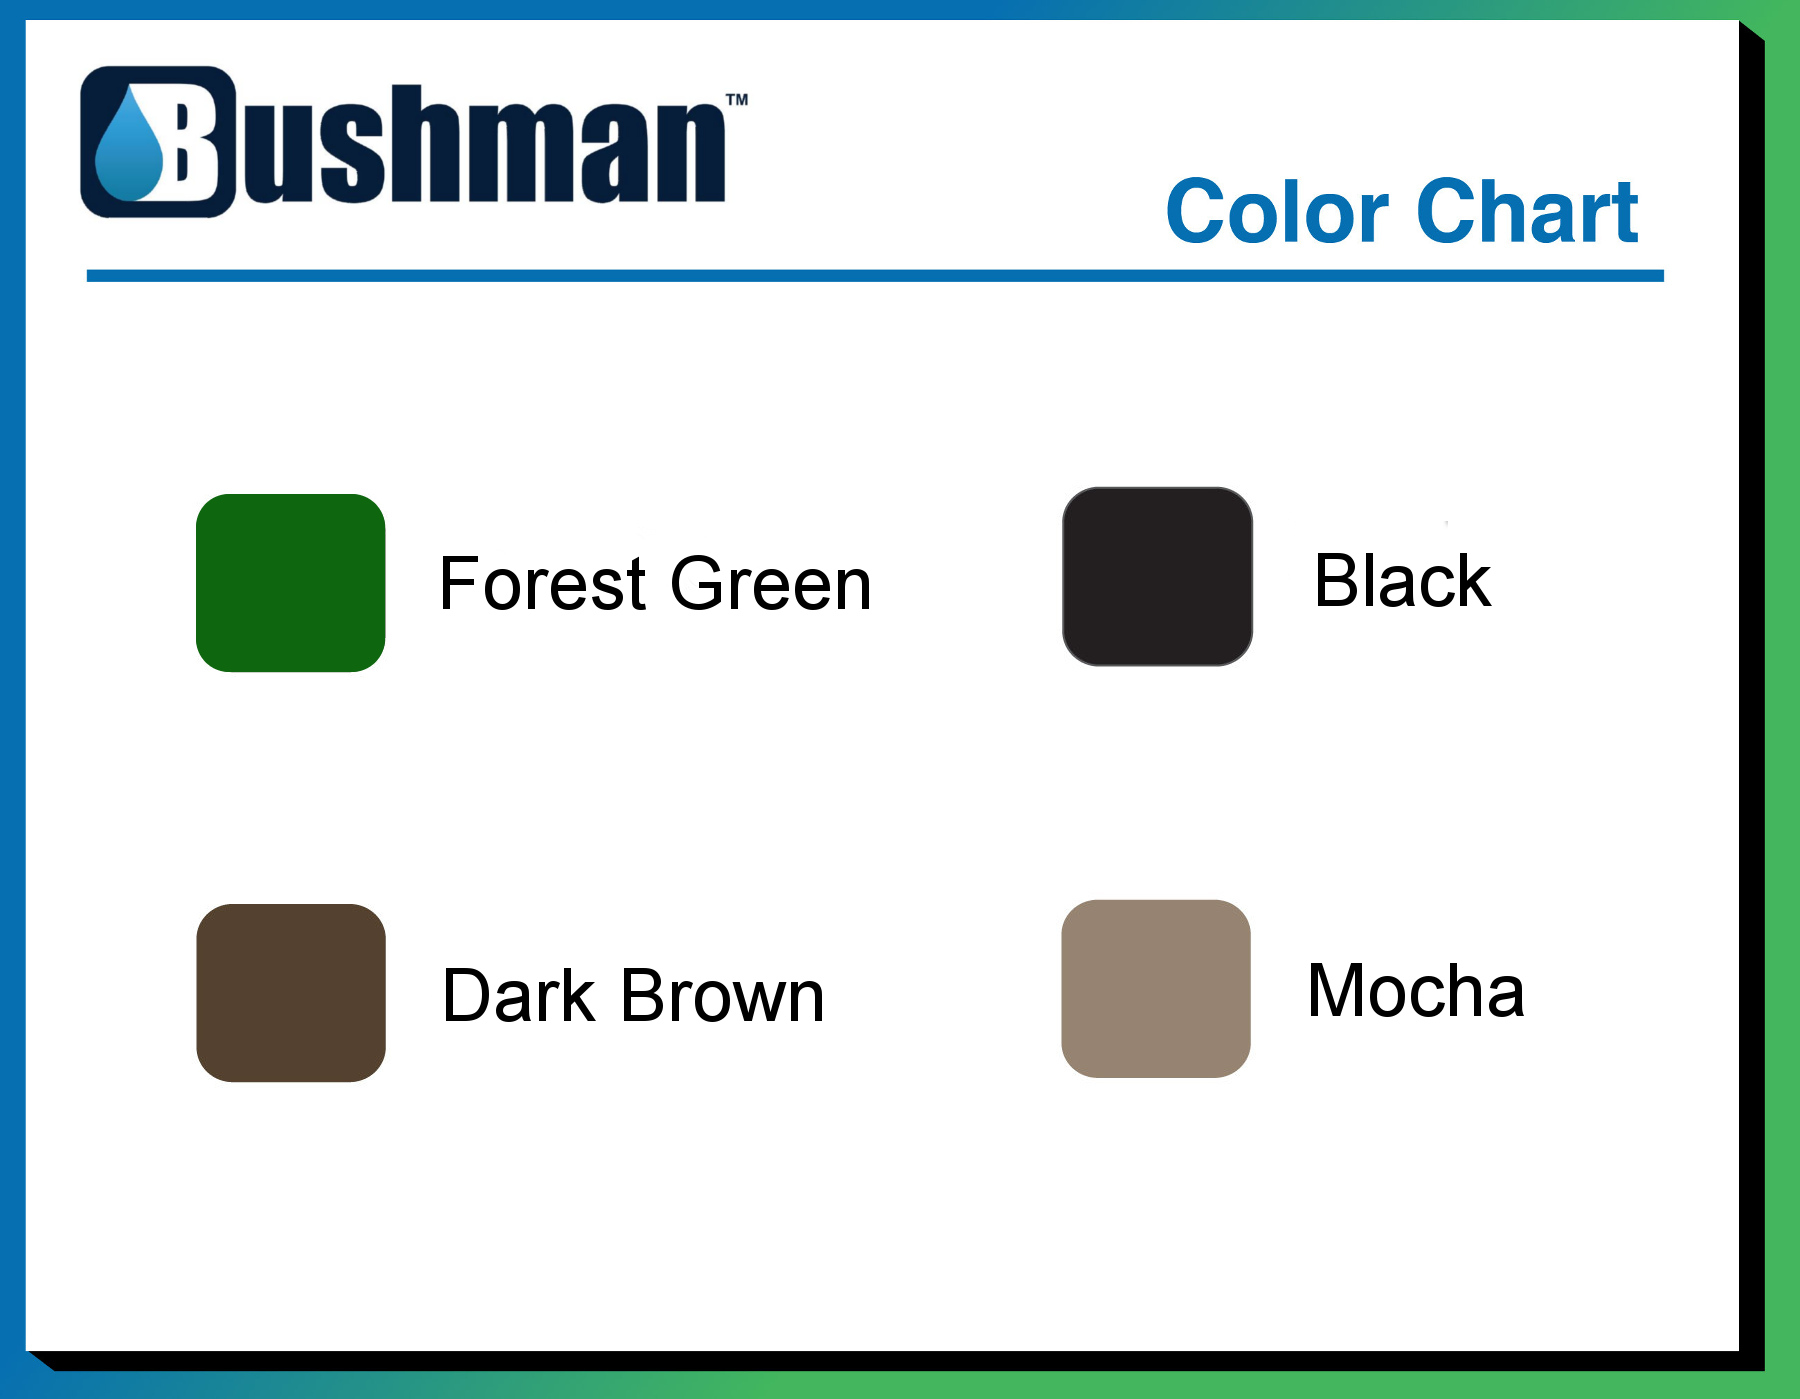 Bushman 4 Color Options Chart